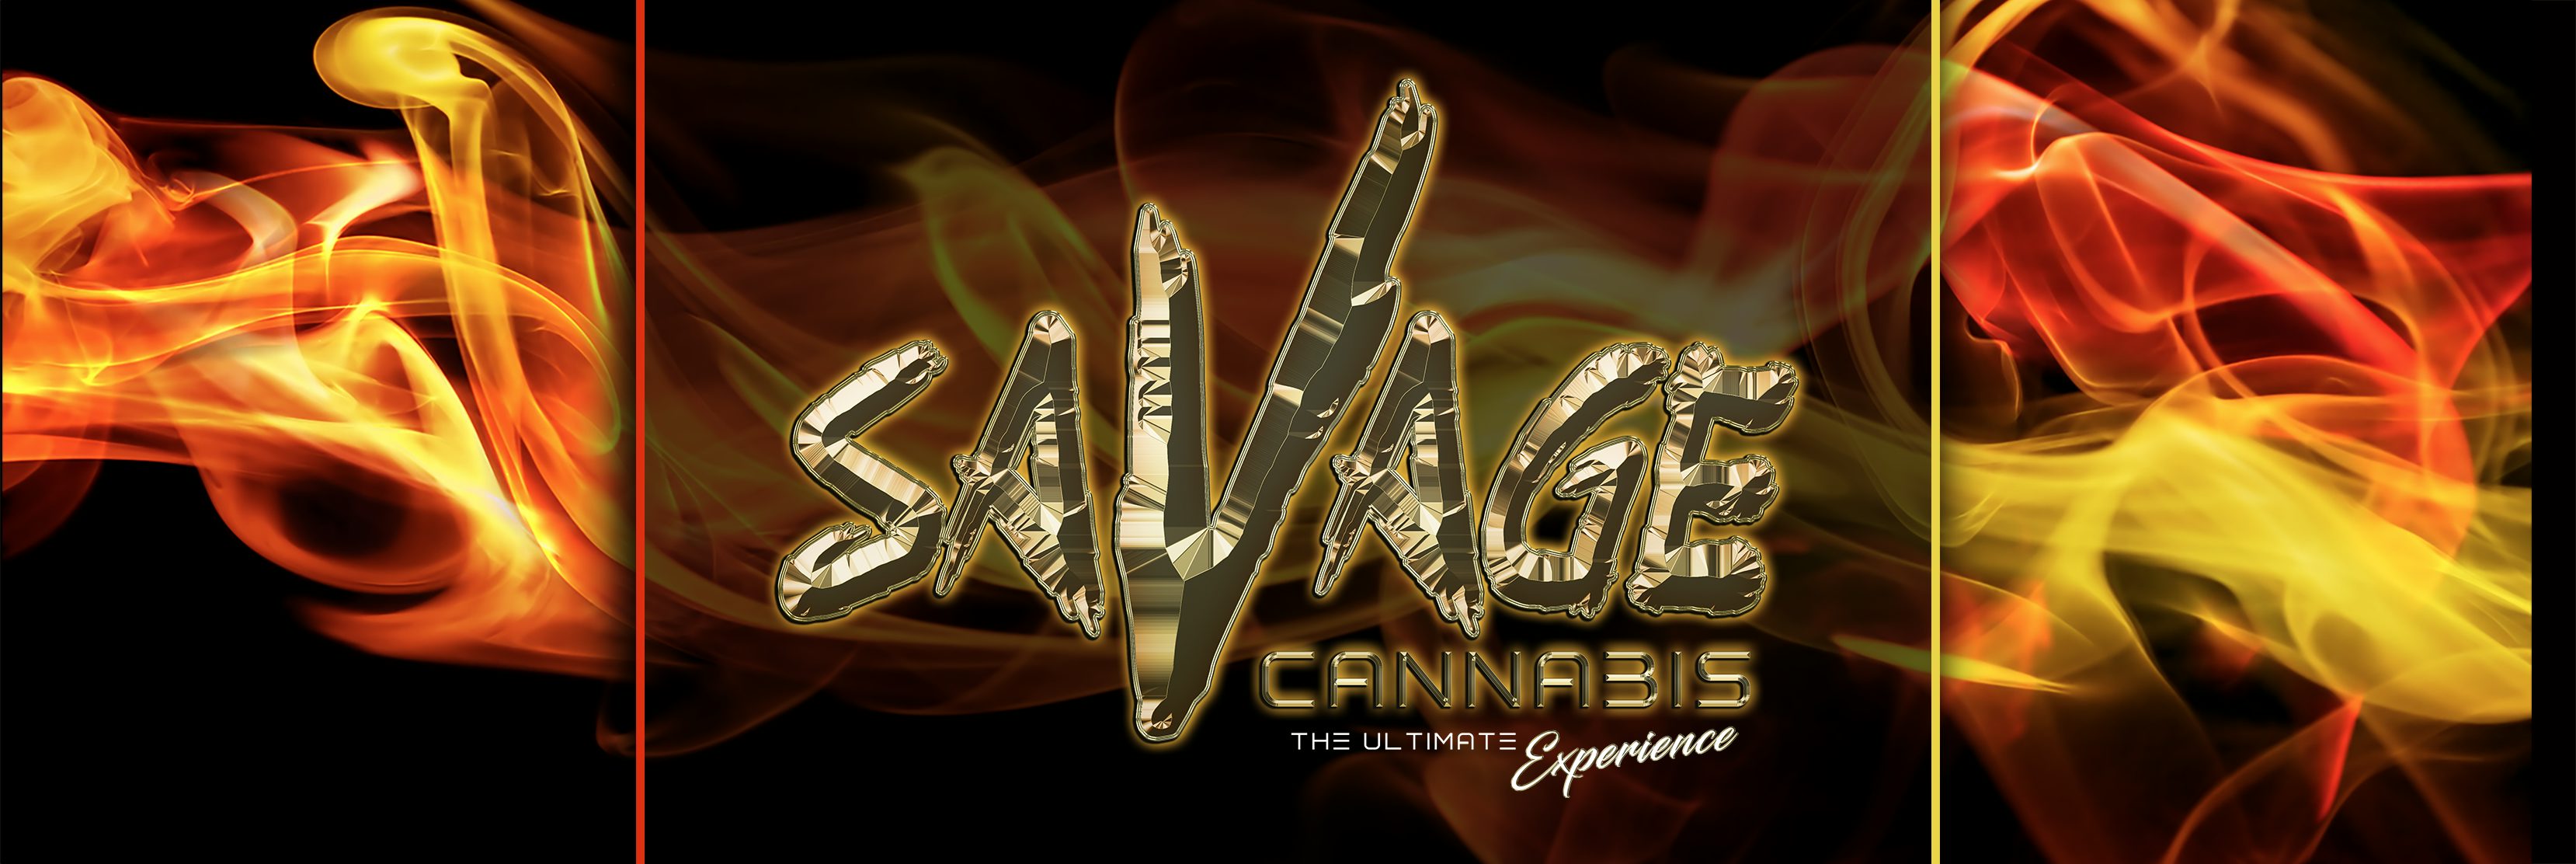 Savage Cannabis banner